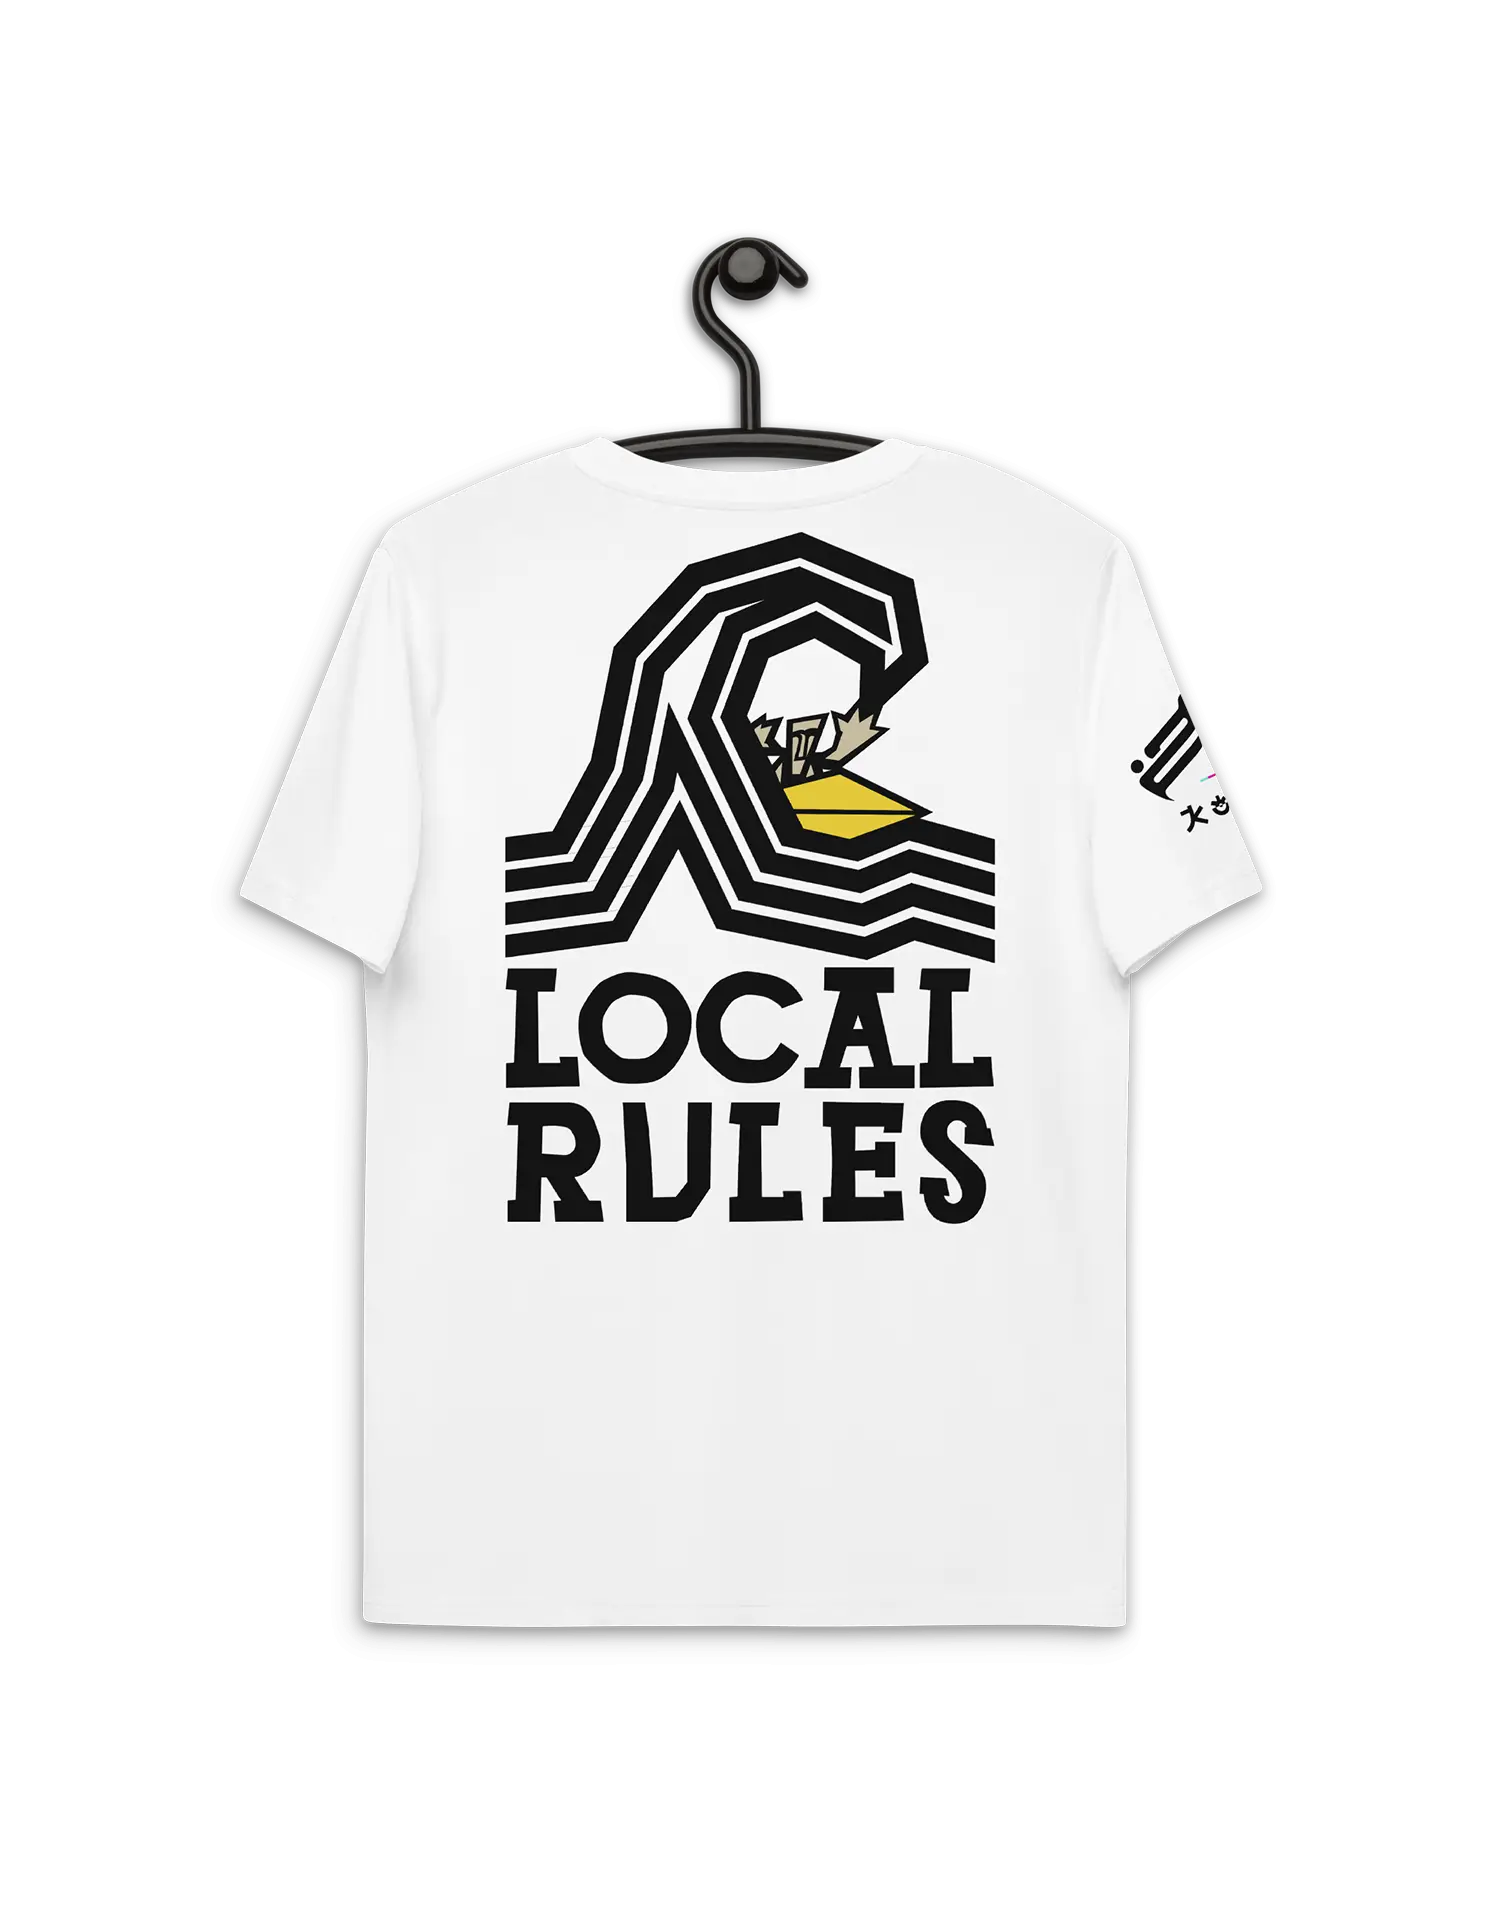 Local Rules White Premium Organic Cotton Eco-friendly T-Shirt by KOAV